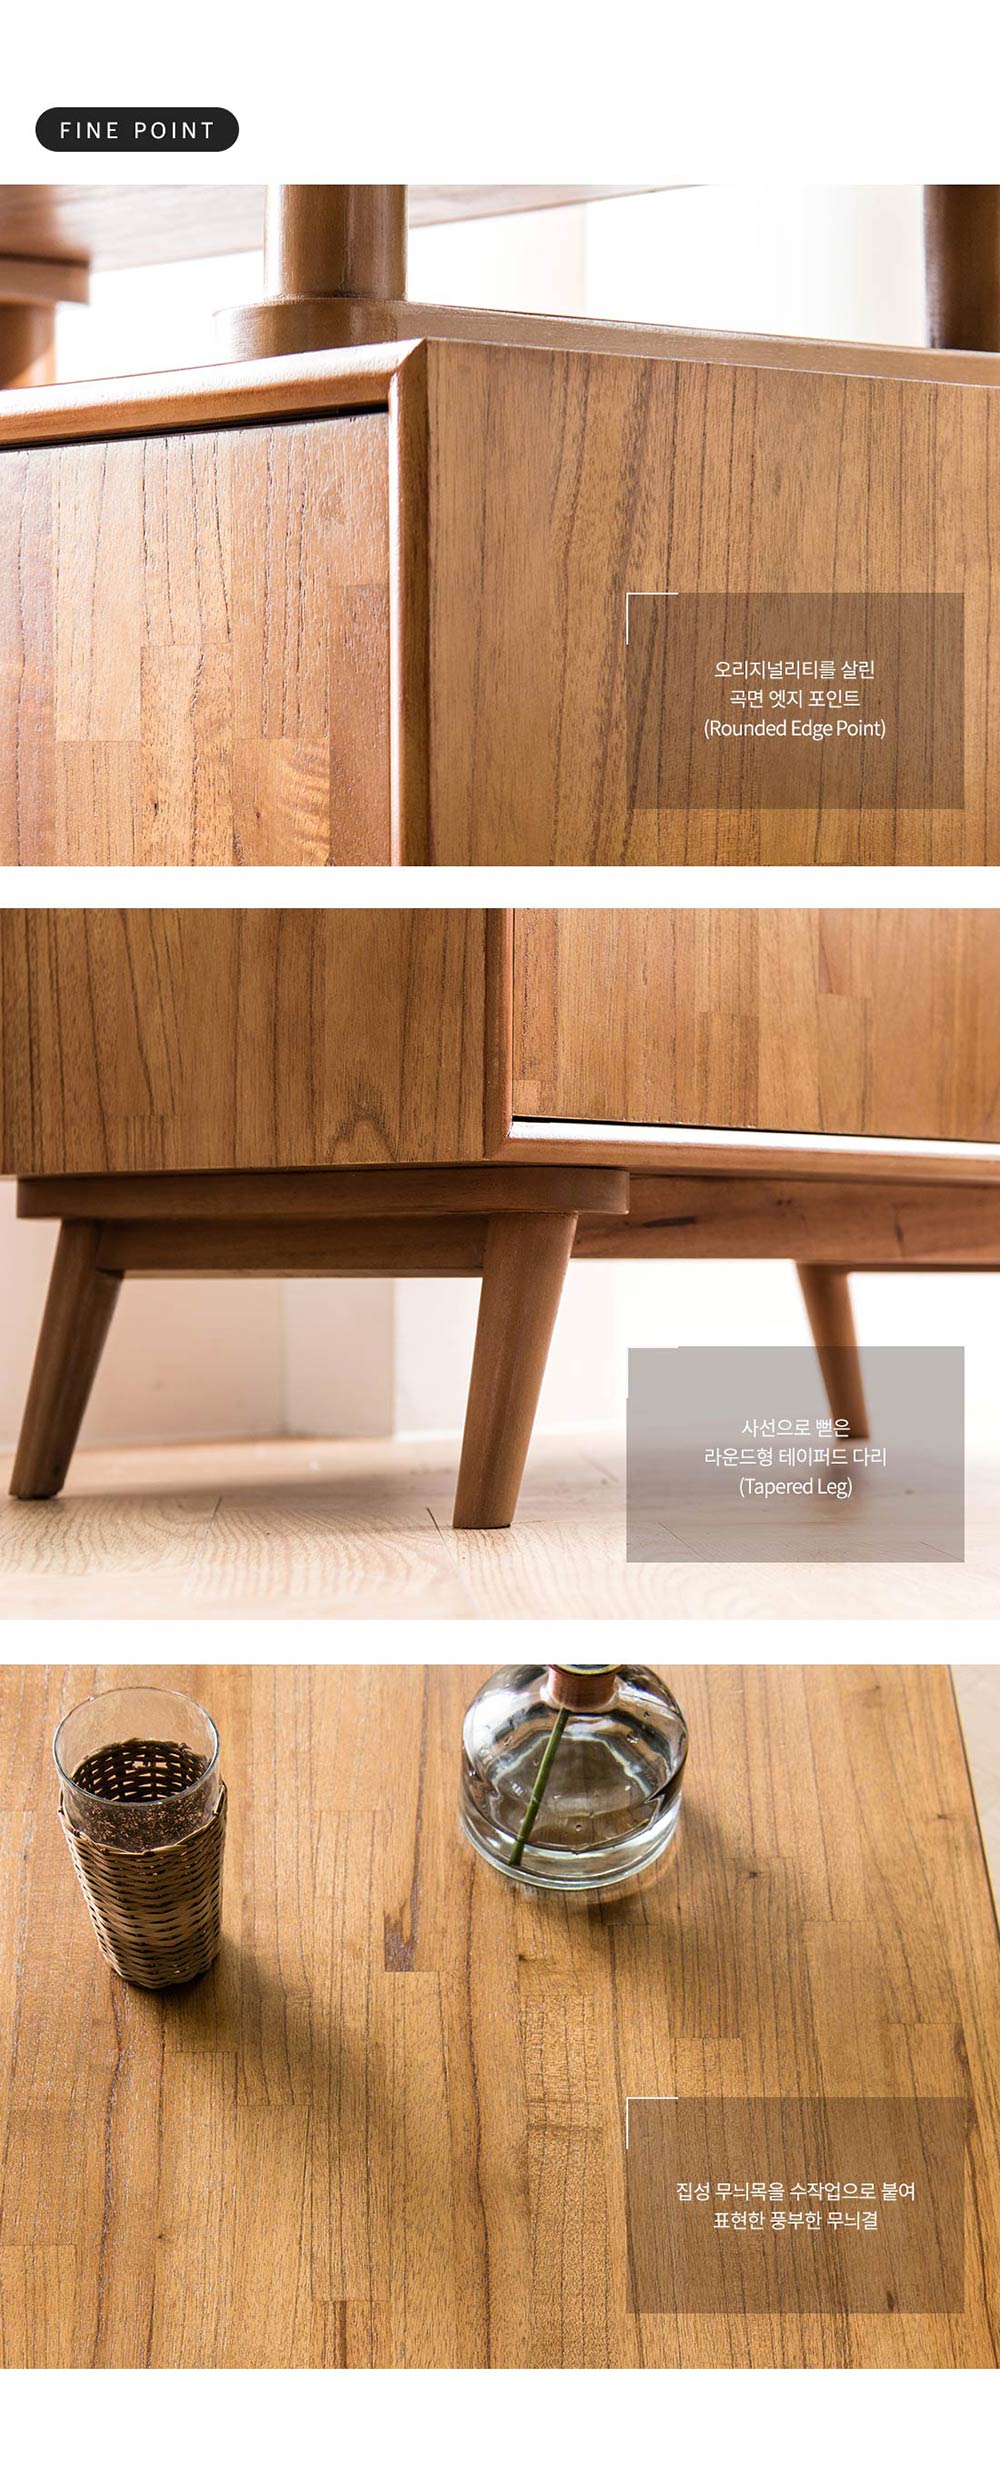 New Retro Sofa Table, Online, Furniture, Singapore, Fine Points